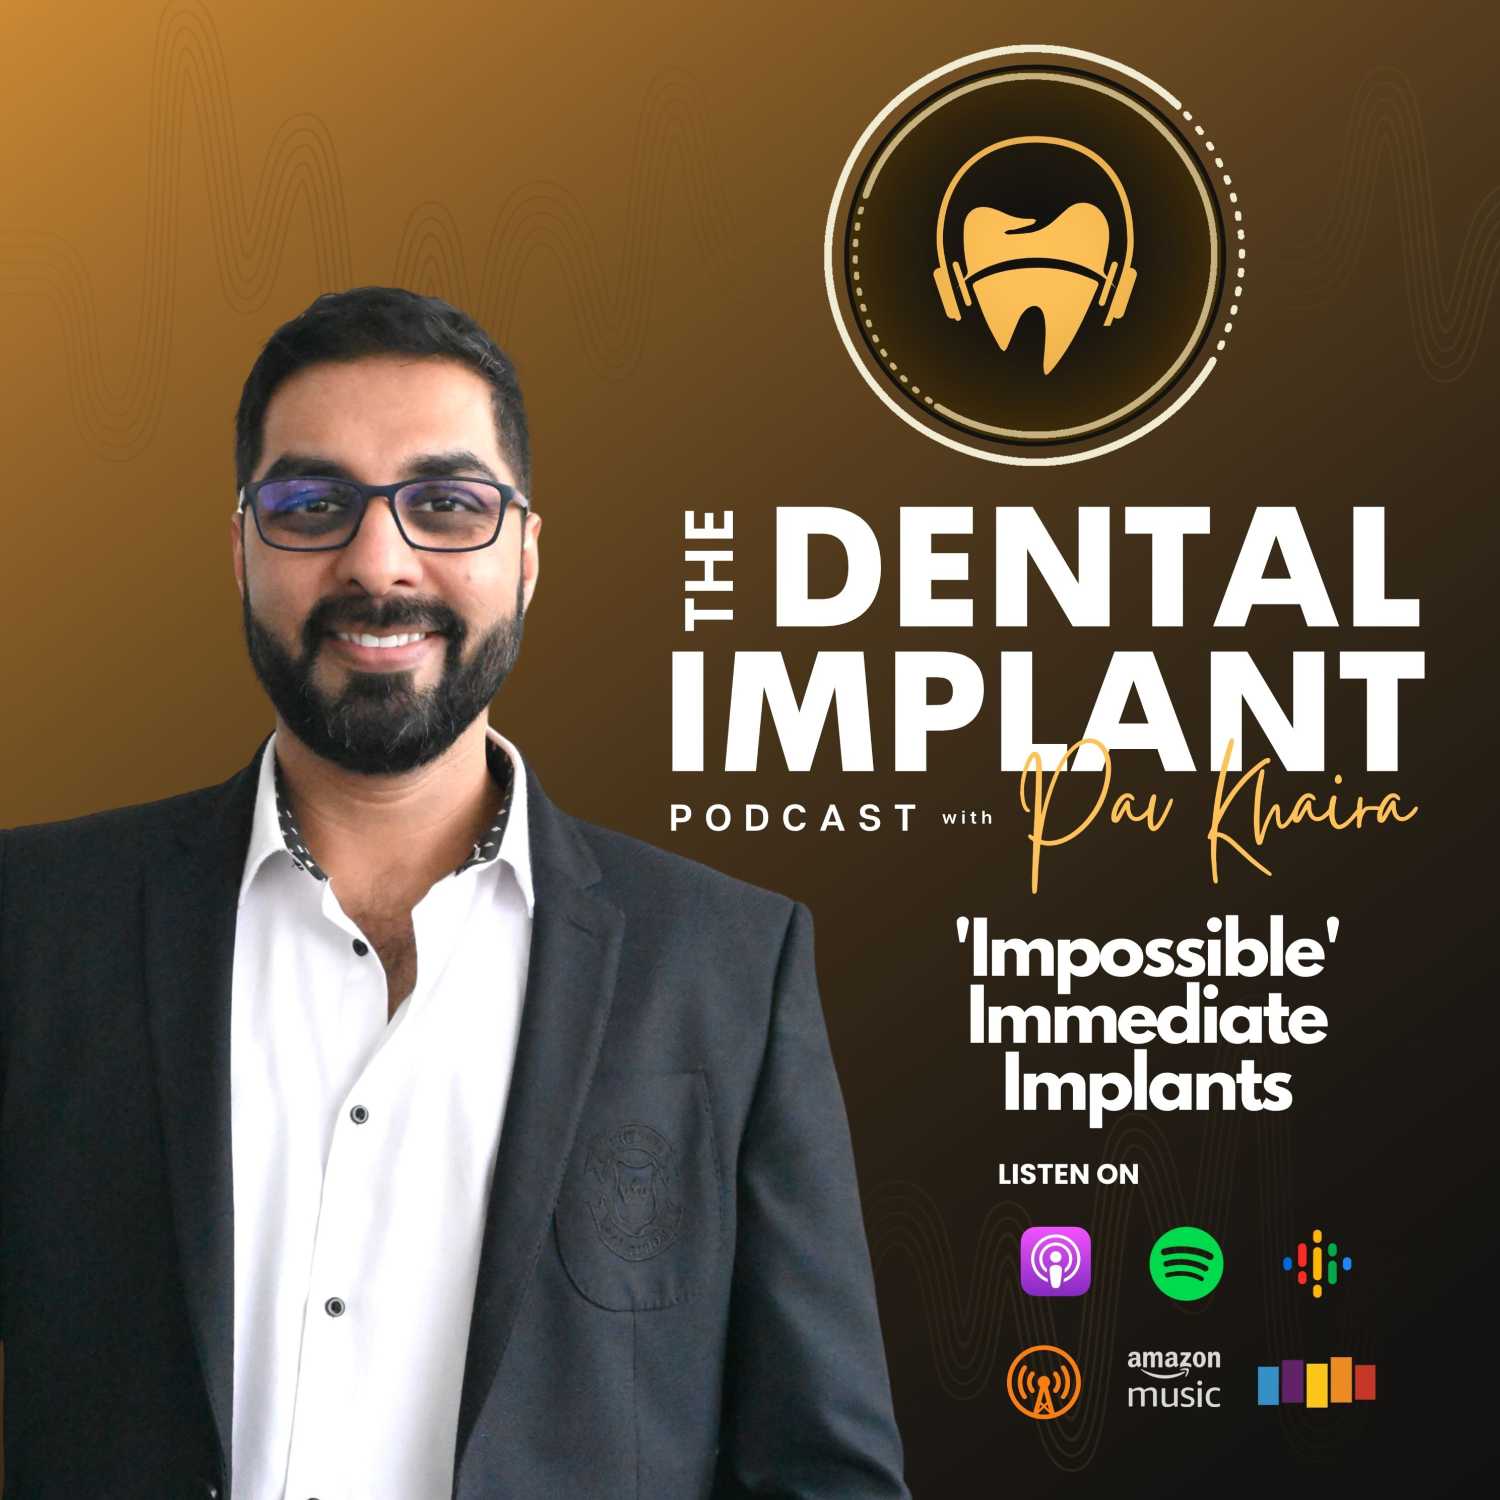 'Impossible' Immediate Implants